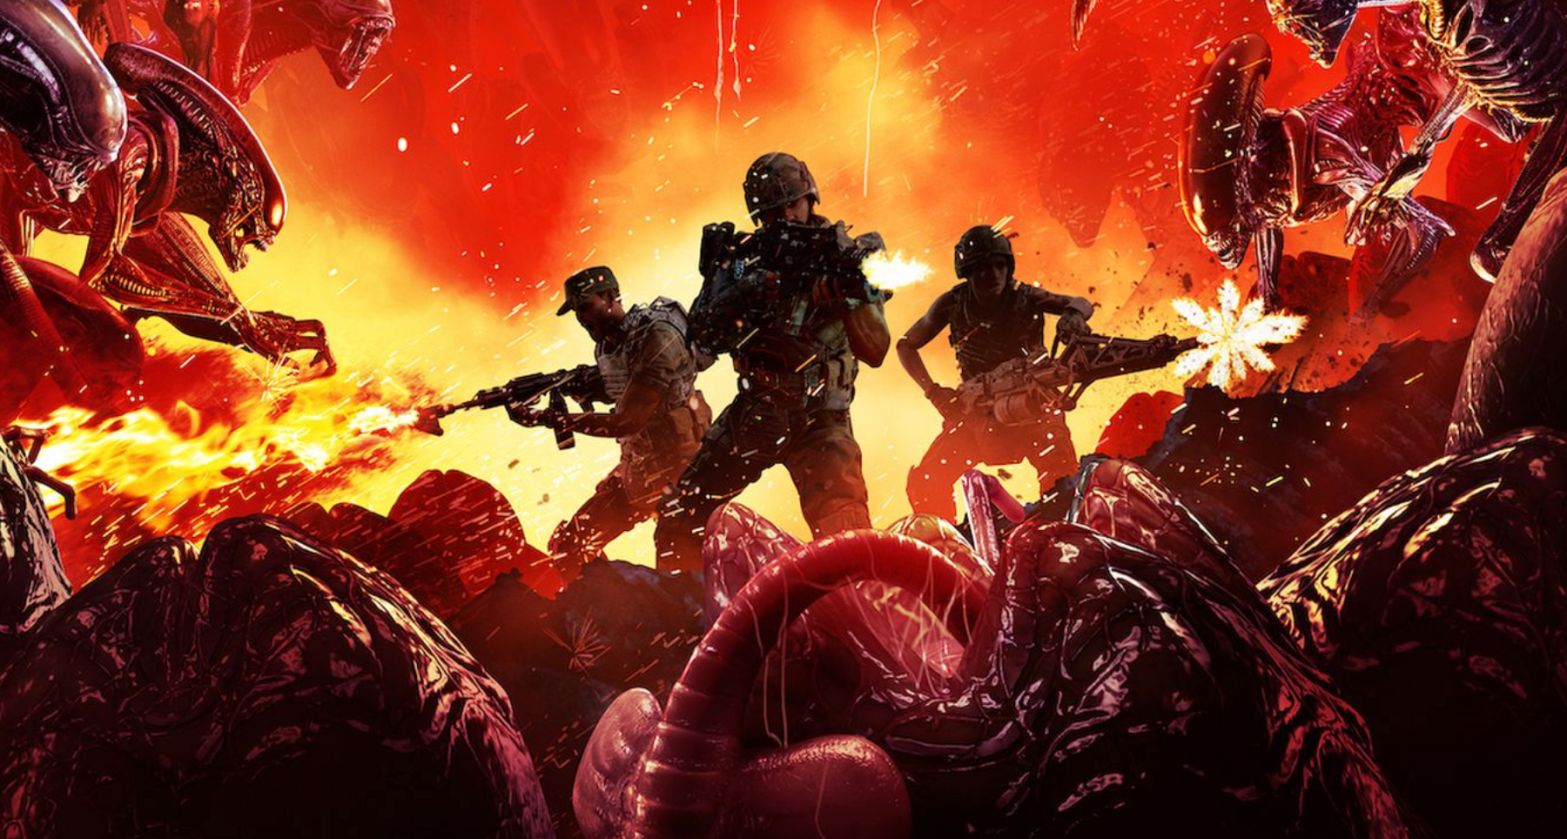 aliens fireteam elite gameplay story release date australia co op multiplayer